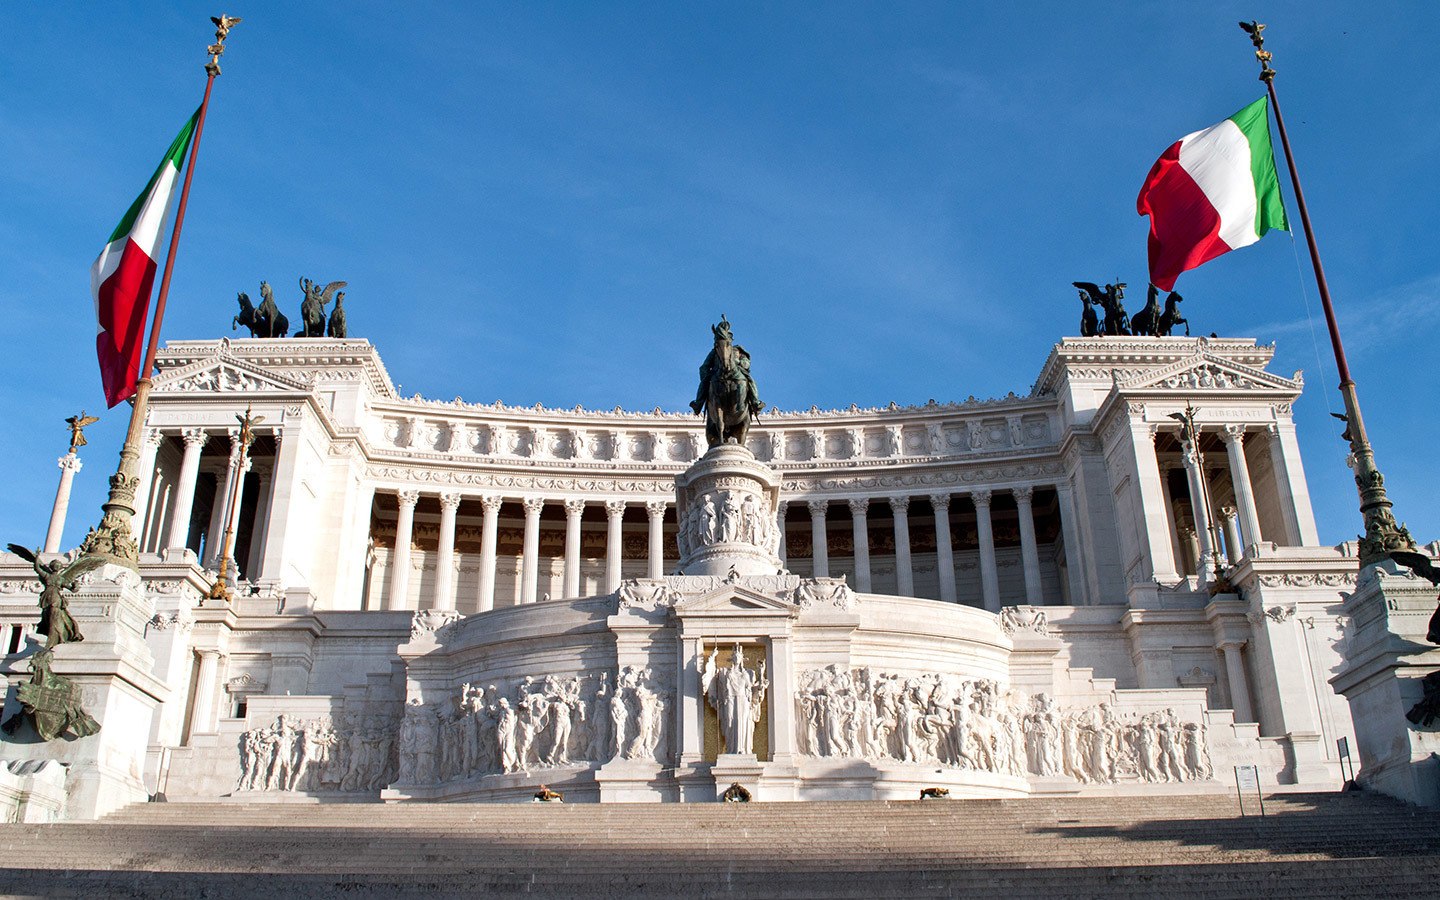 The Vittorio Emanuele II Monument in Rome, Italy